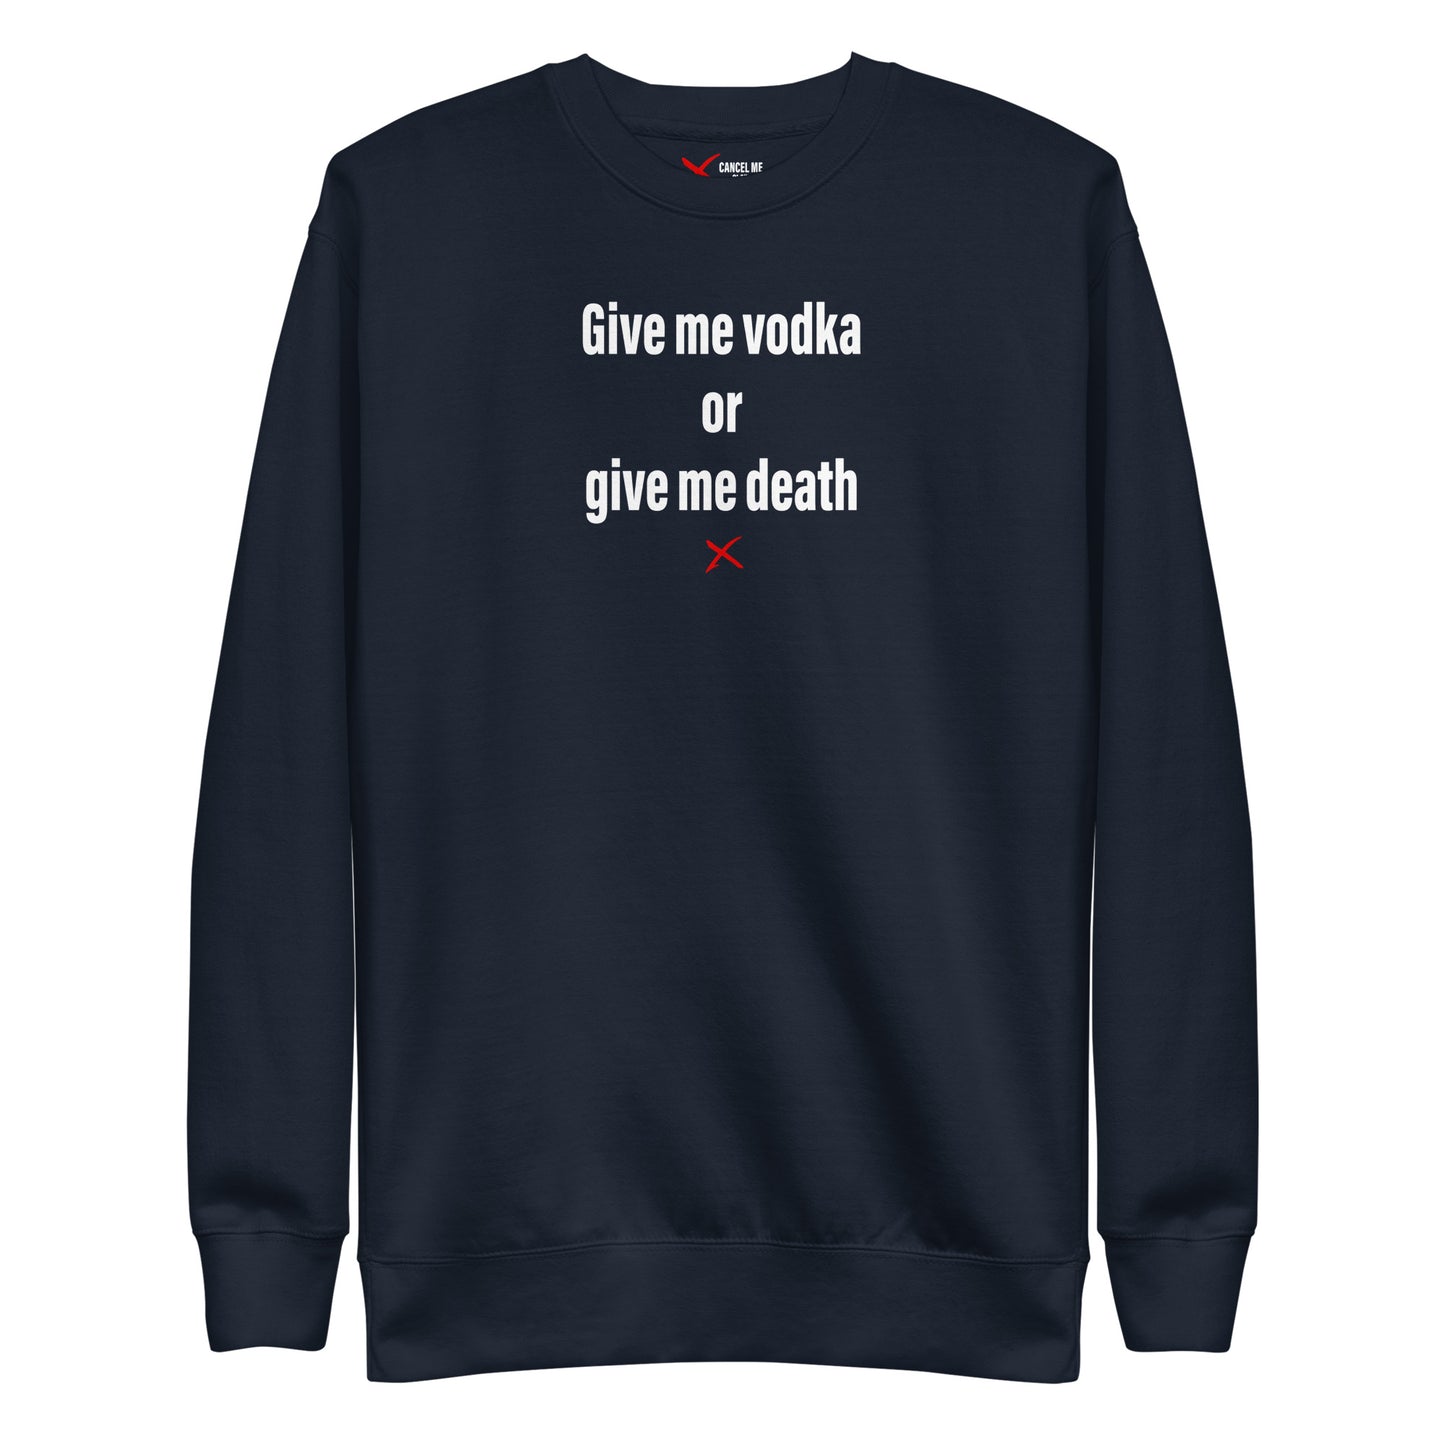 Give me vodka or give me death - Sweatshirt